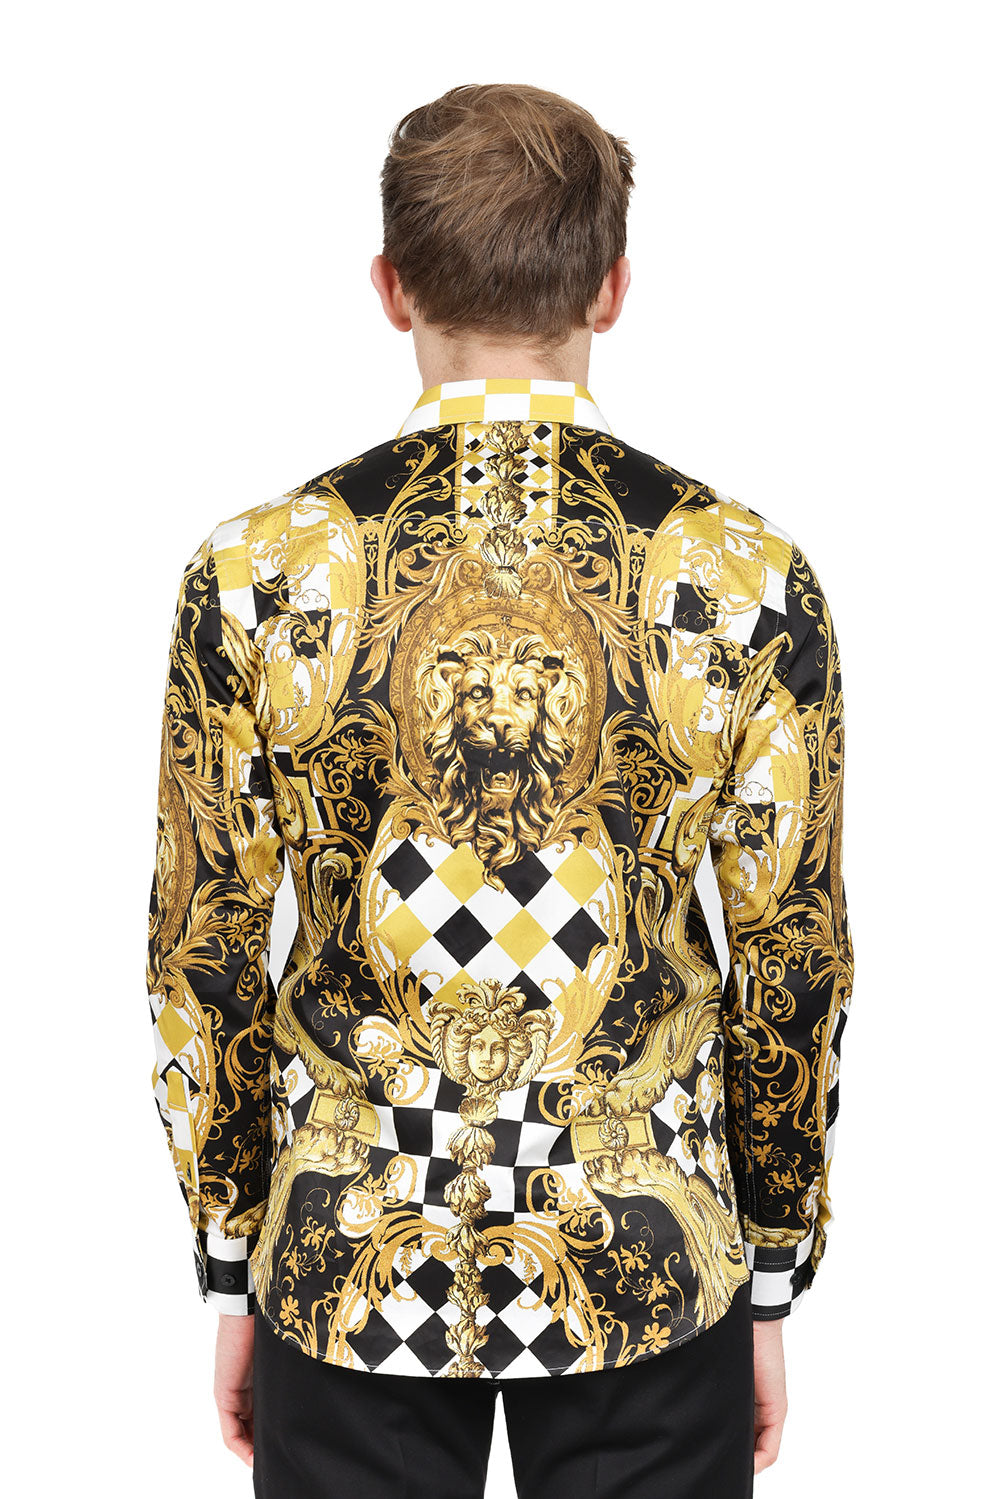 BARABAS Men's Medusa Checkered Lion Baroque Button Down Shirt SP20 Gold